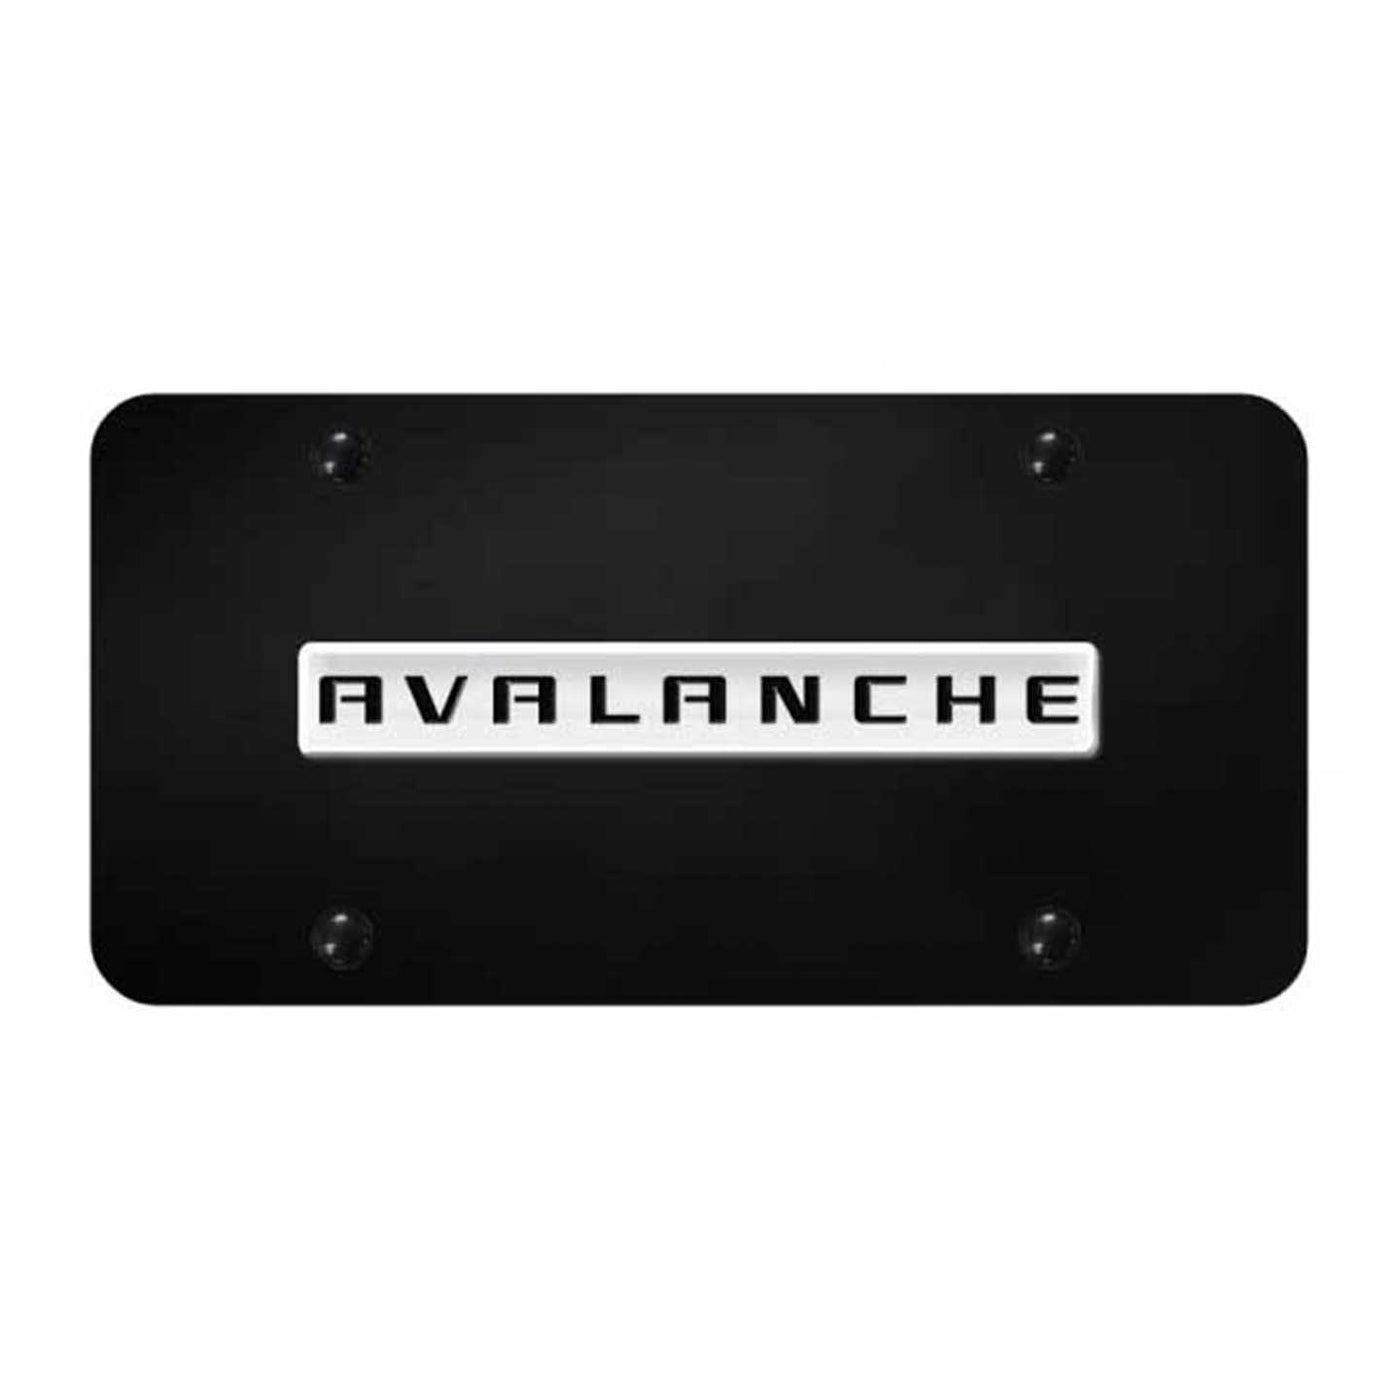 Avalanche Name License Plate - Chrome on Black